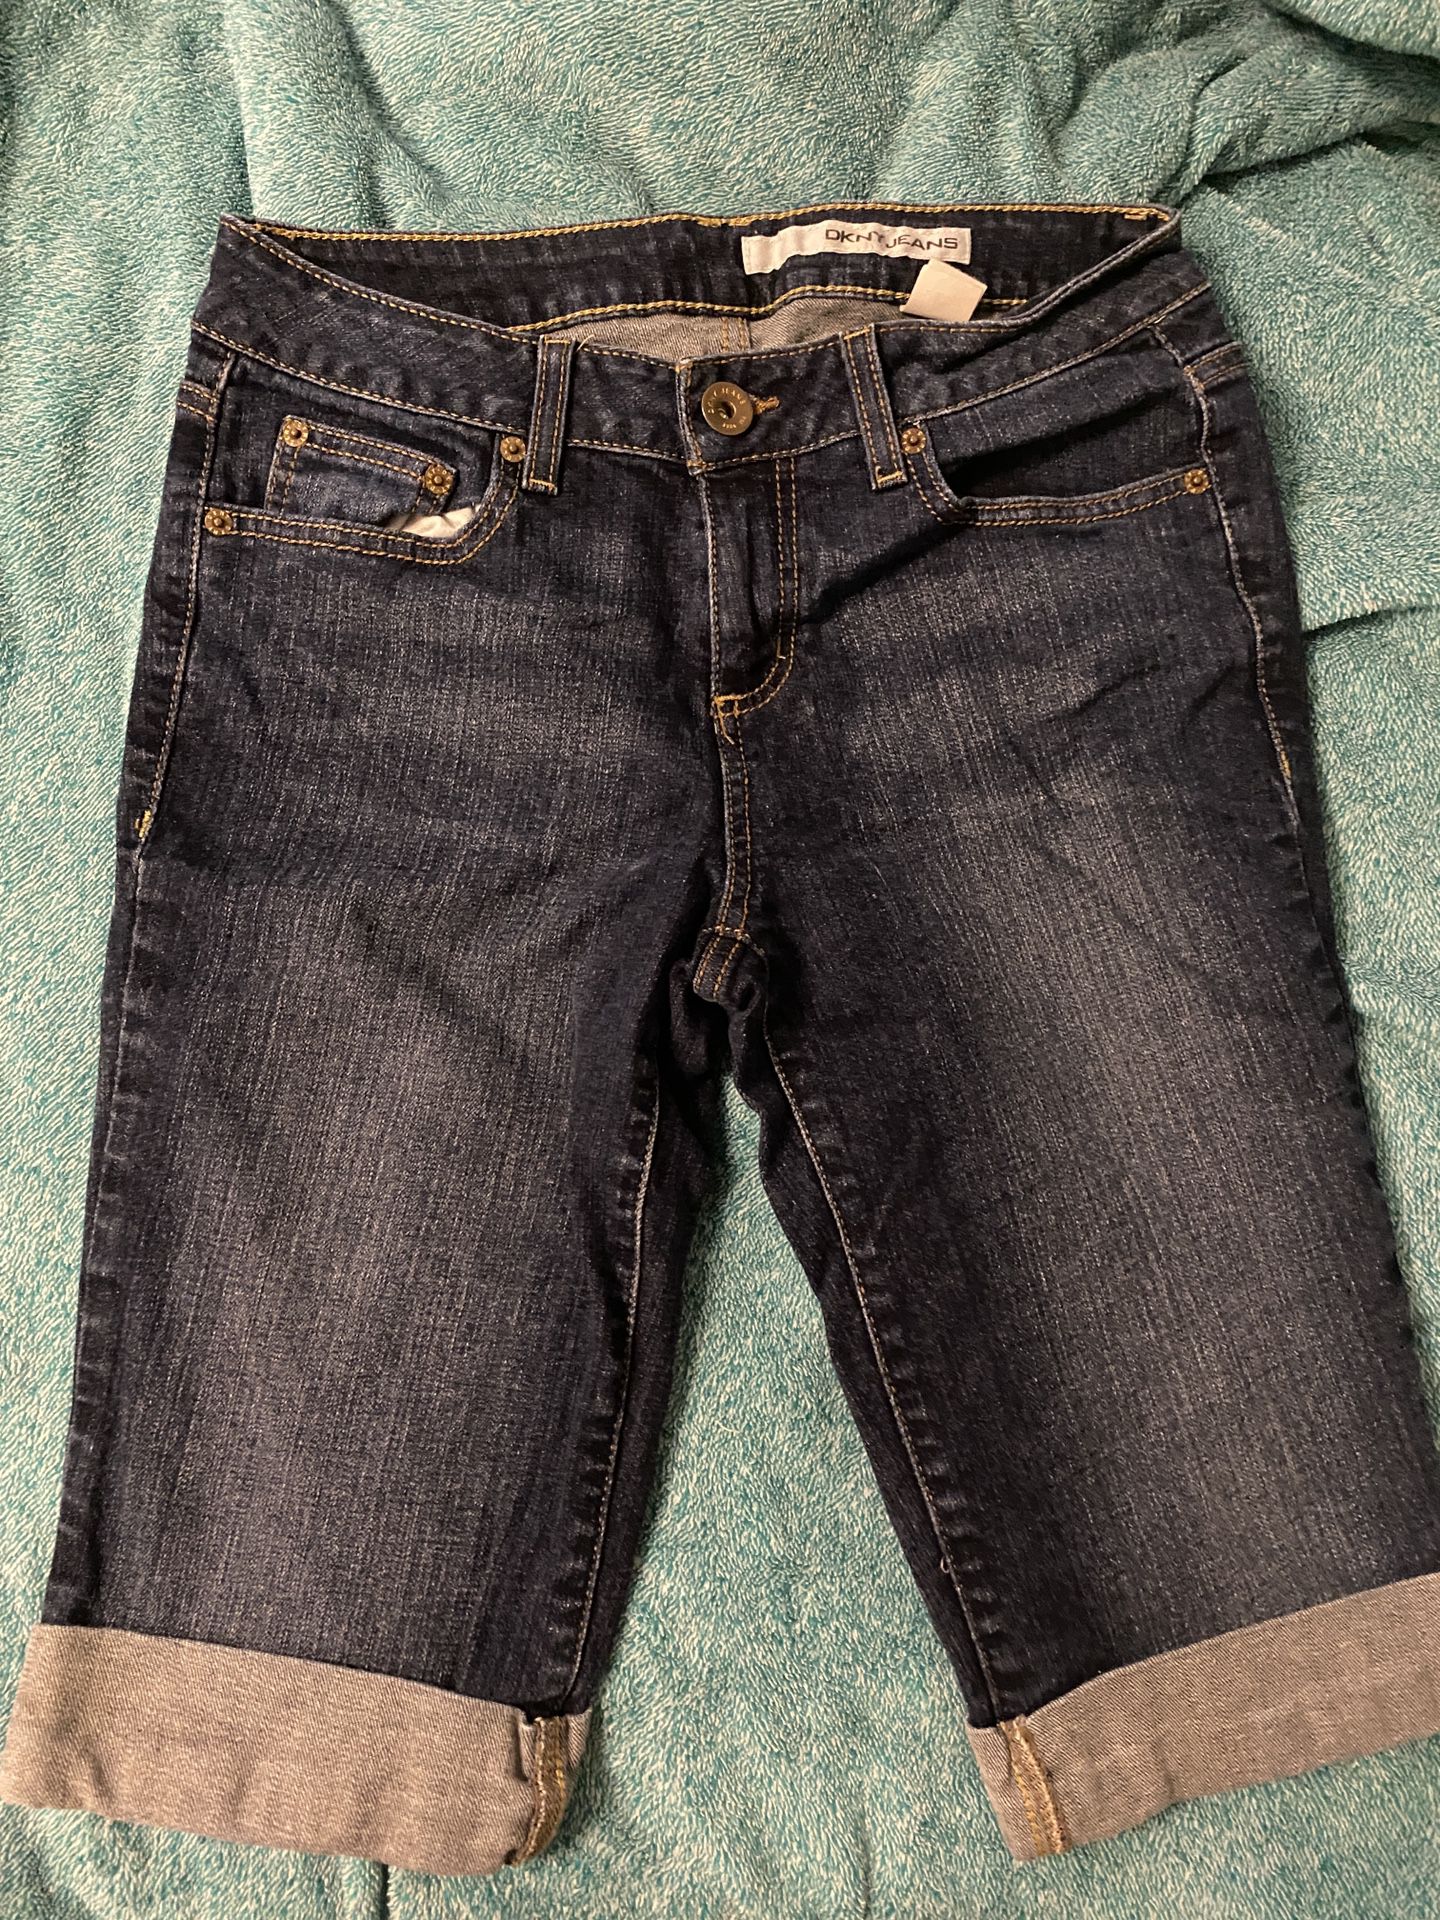 DKNY Knee-Length Cuffed Jeans Size 8